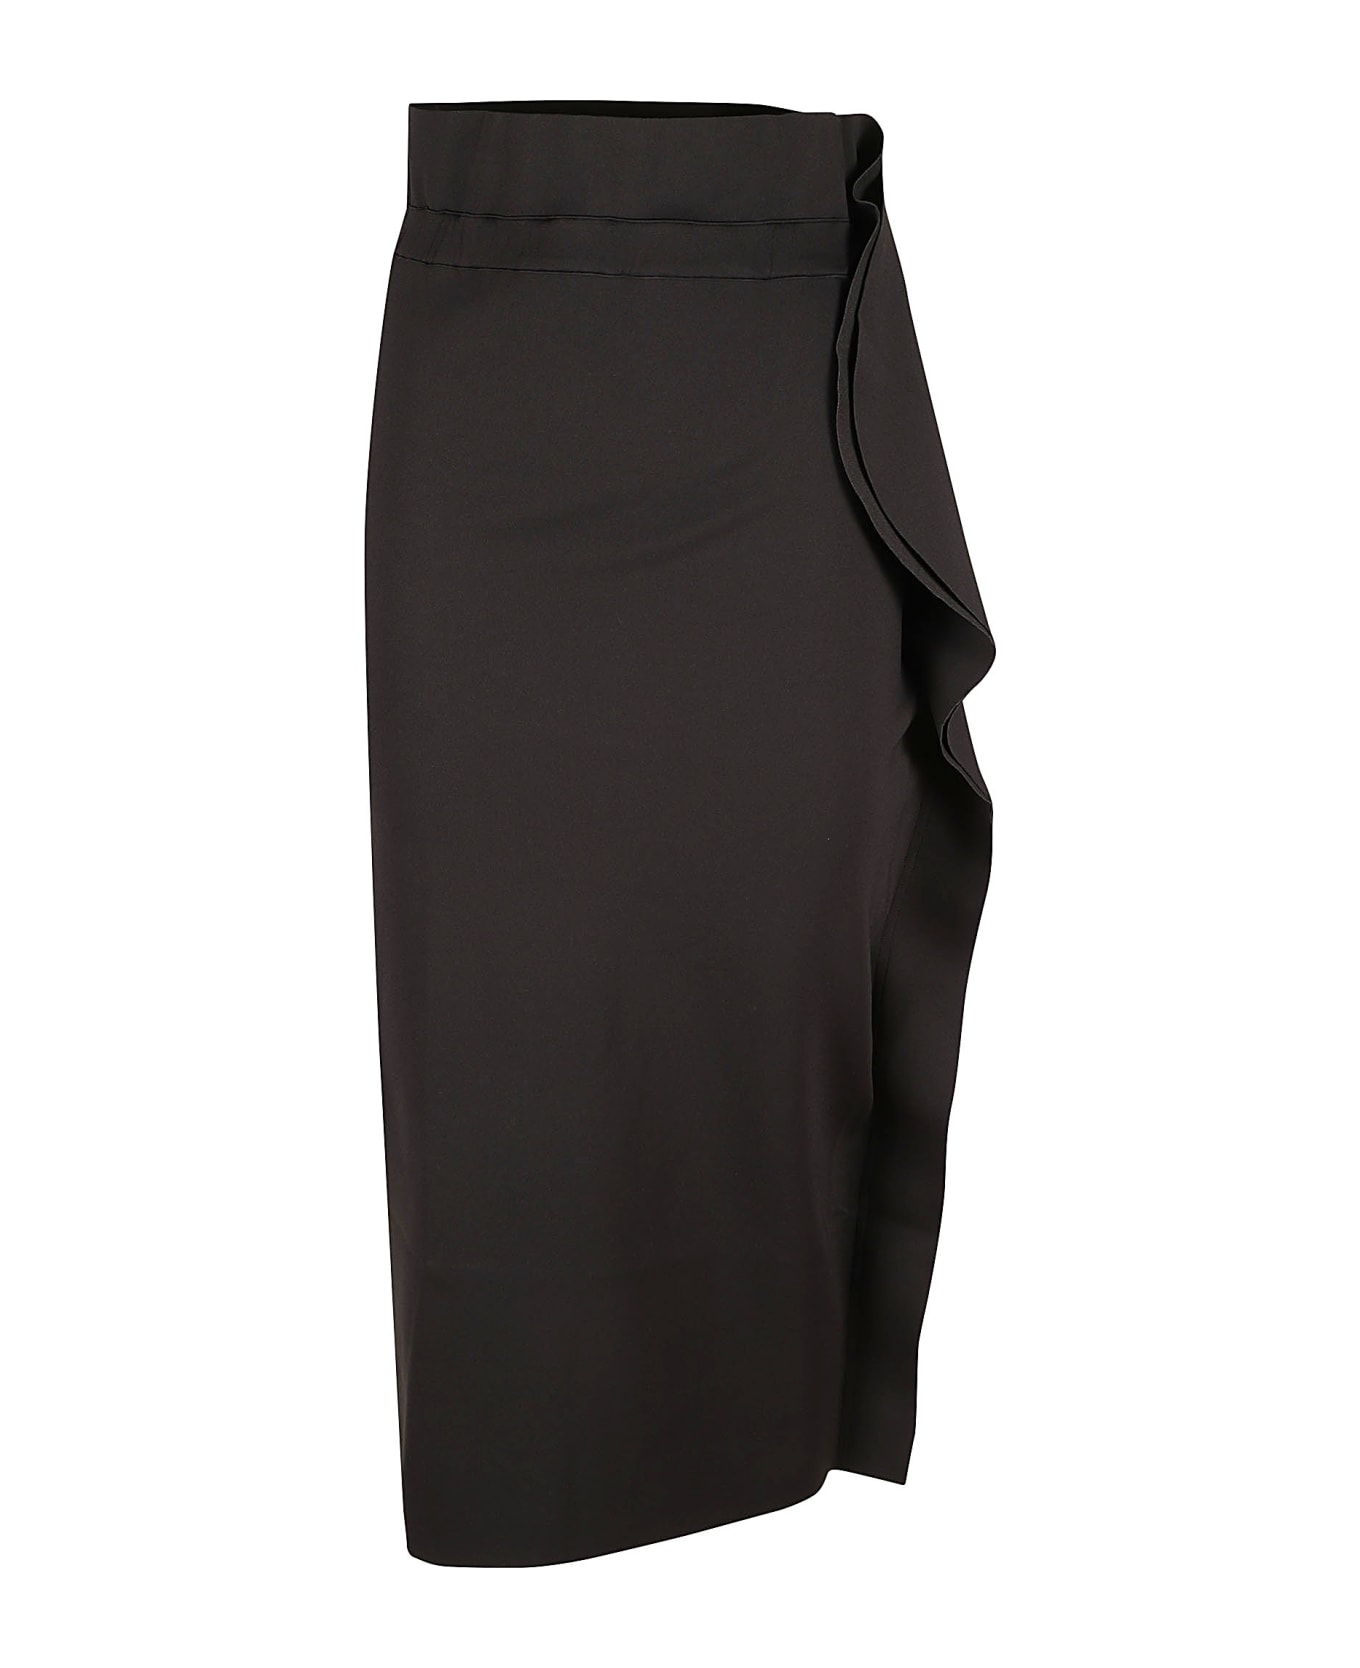 Fiorucci Ruffle Midi Skirt - black/Neoprene